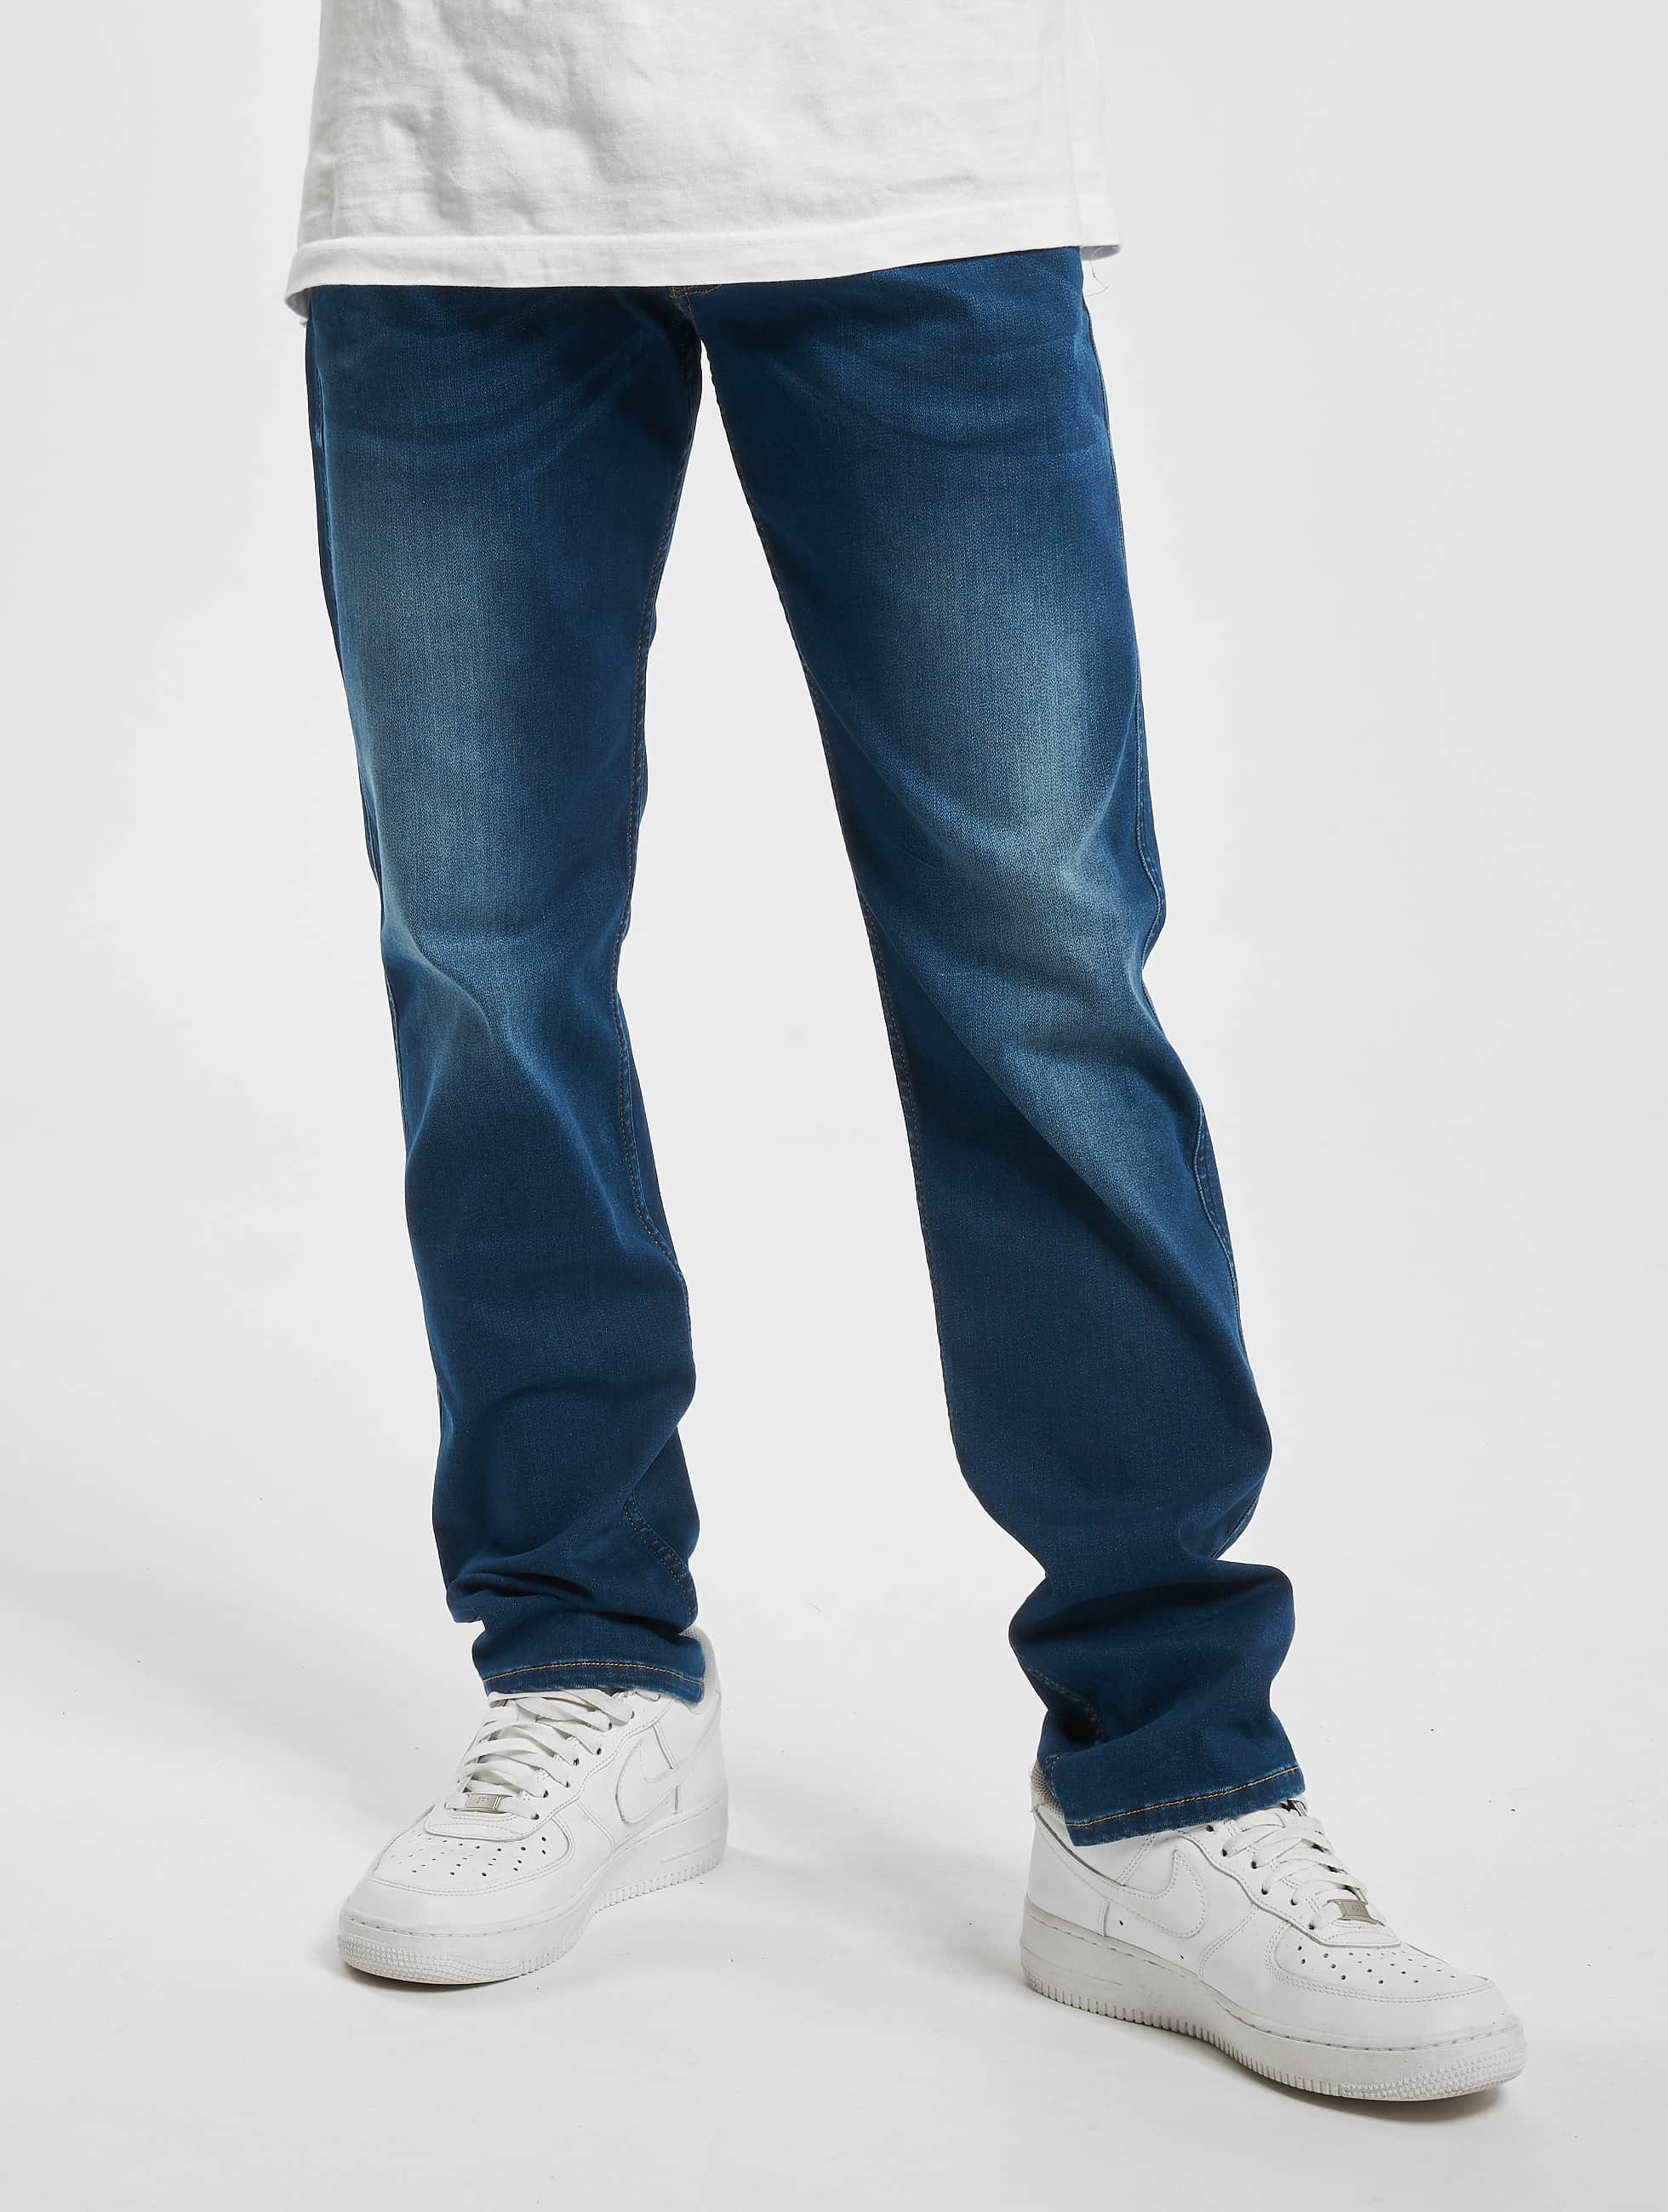 Replay Jeans / Slim Jeans Denim in blauw 802502